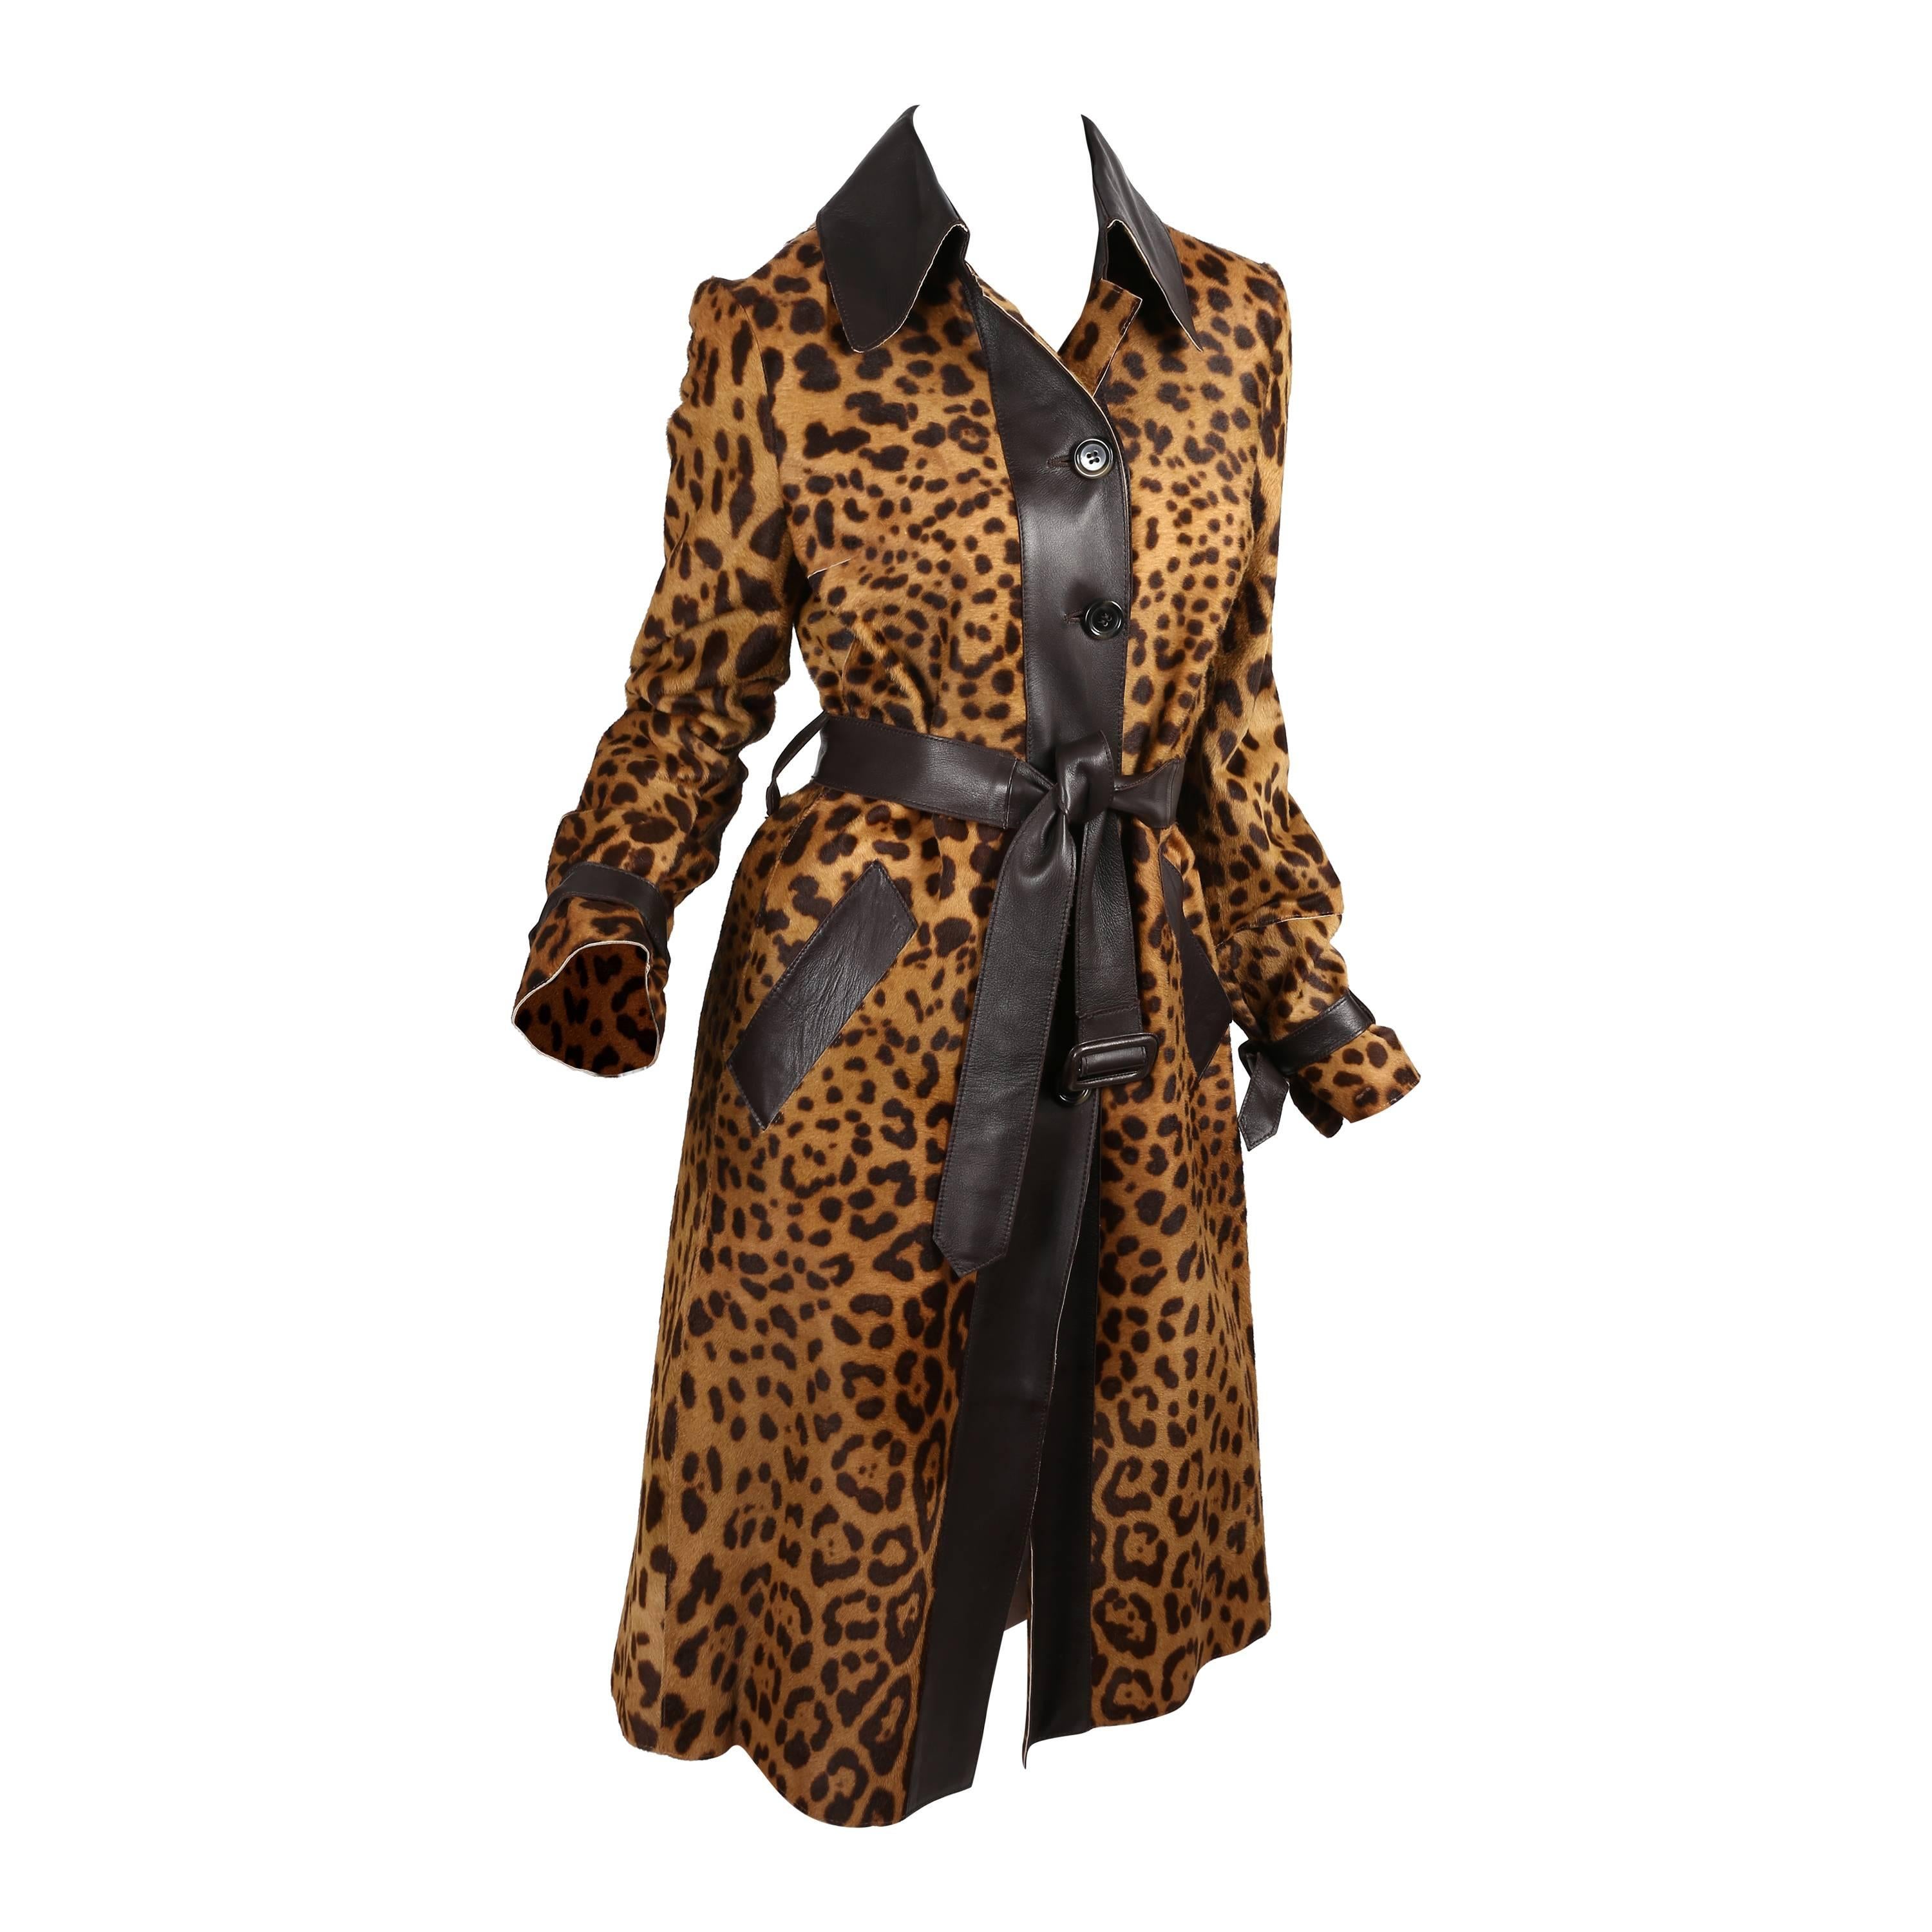 Dolce & Gabbana Leopard Print Pony skin Coat - Size 40